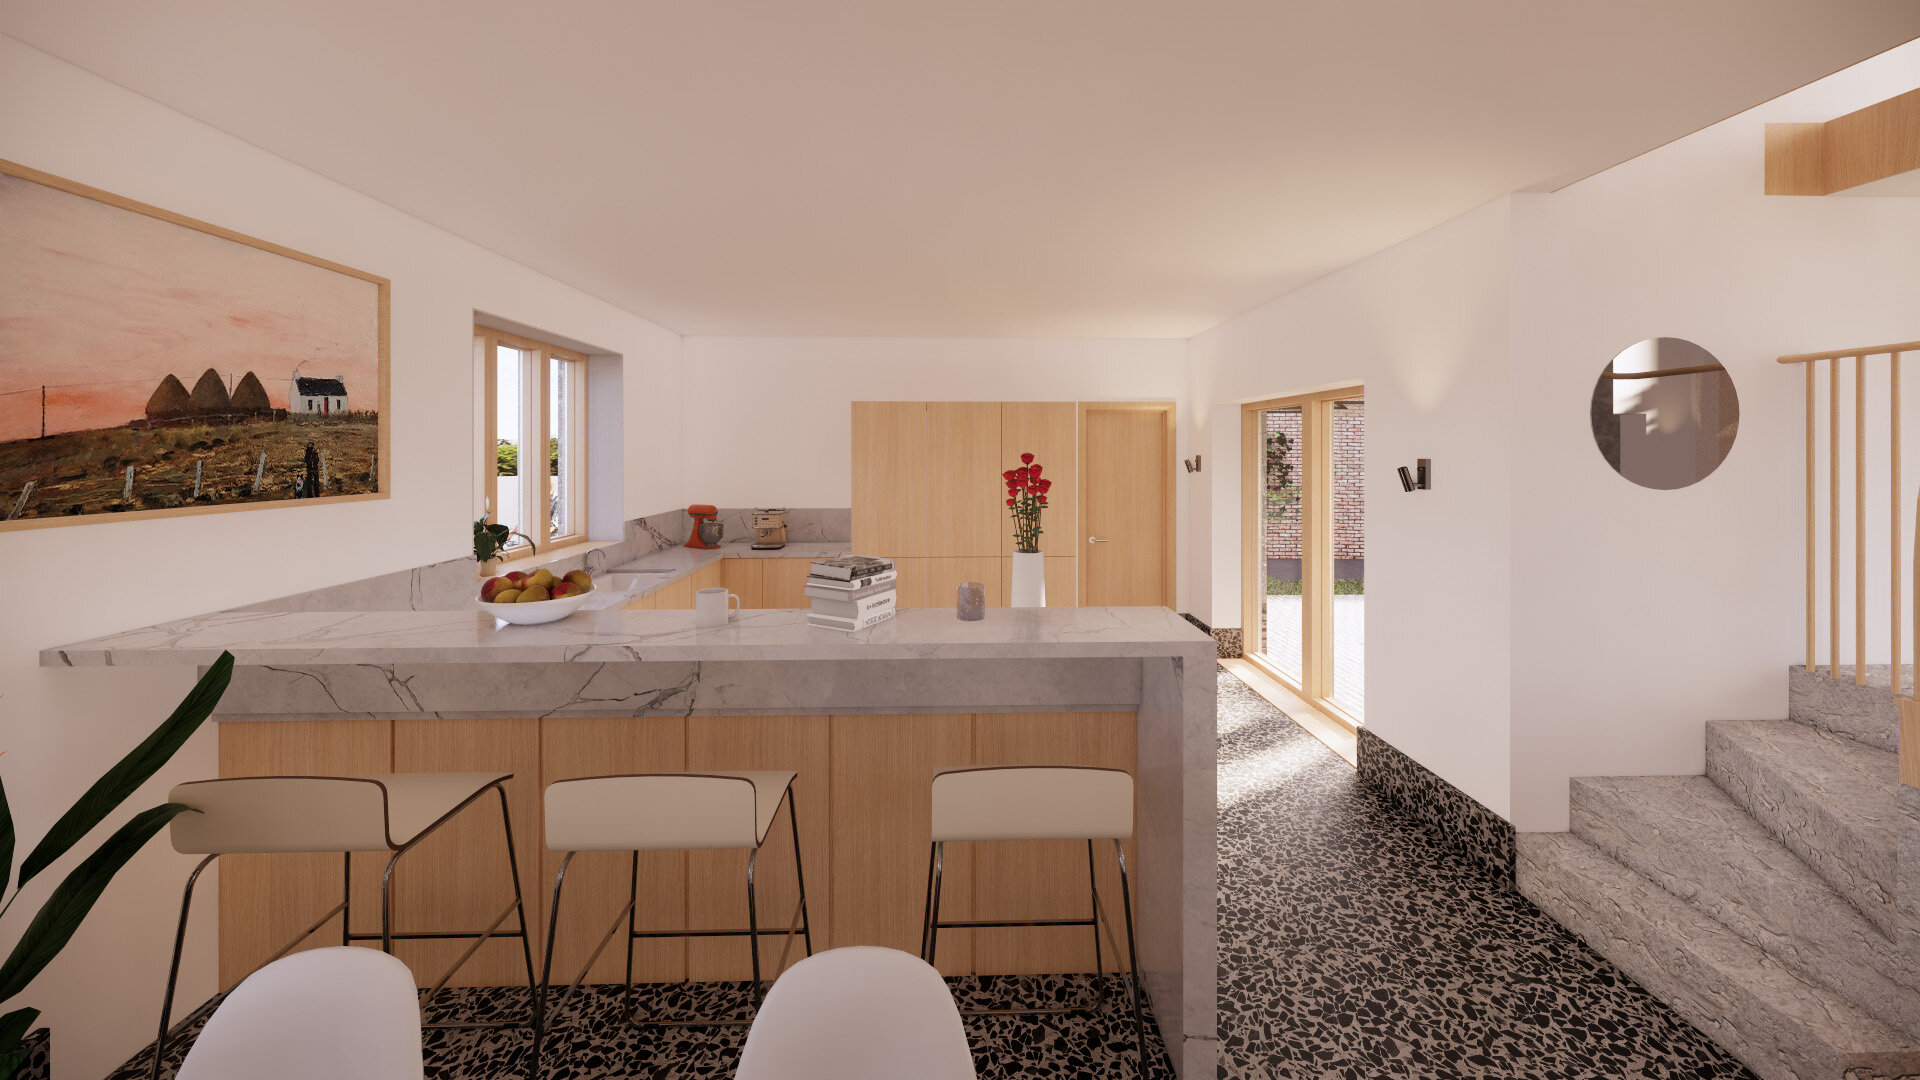 Kitchen - East Yorkshire Passivhaus - Bridlington Architects - Samuel Kendall Associates